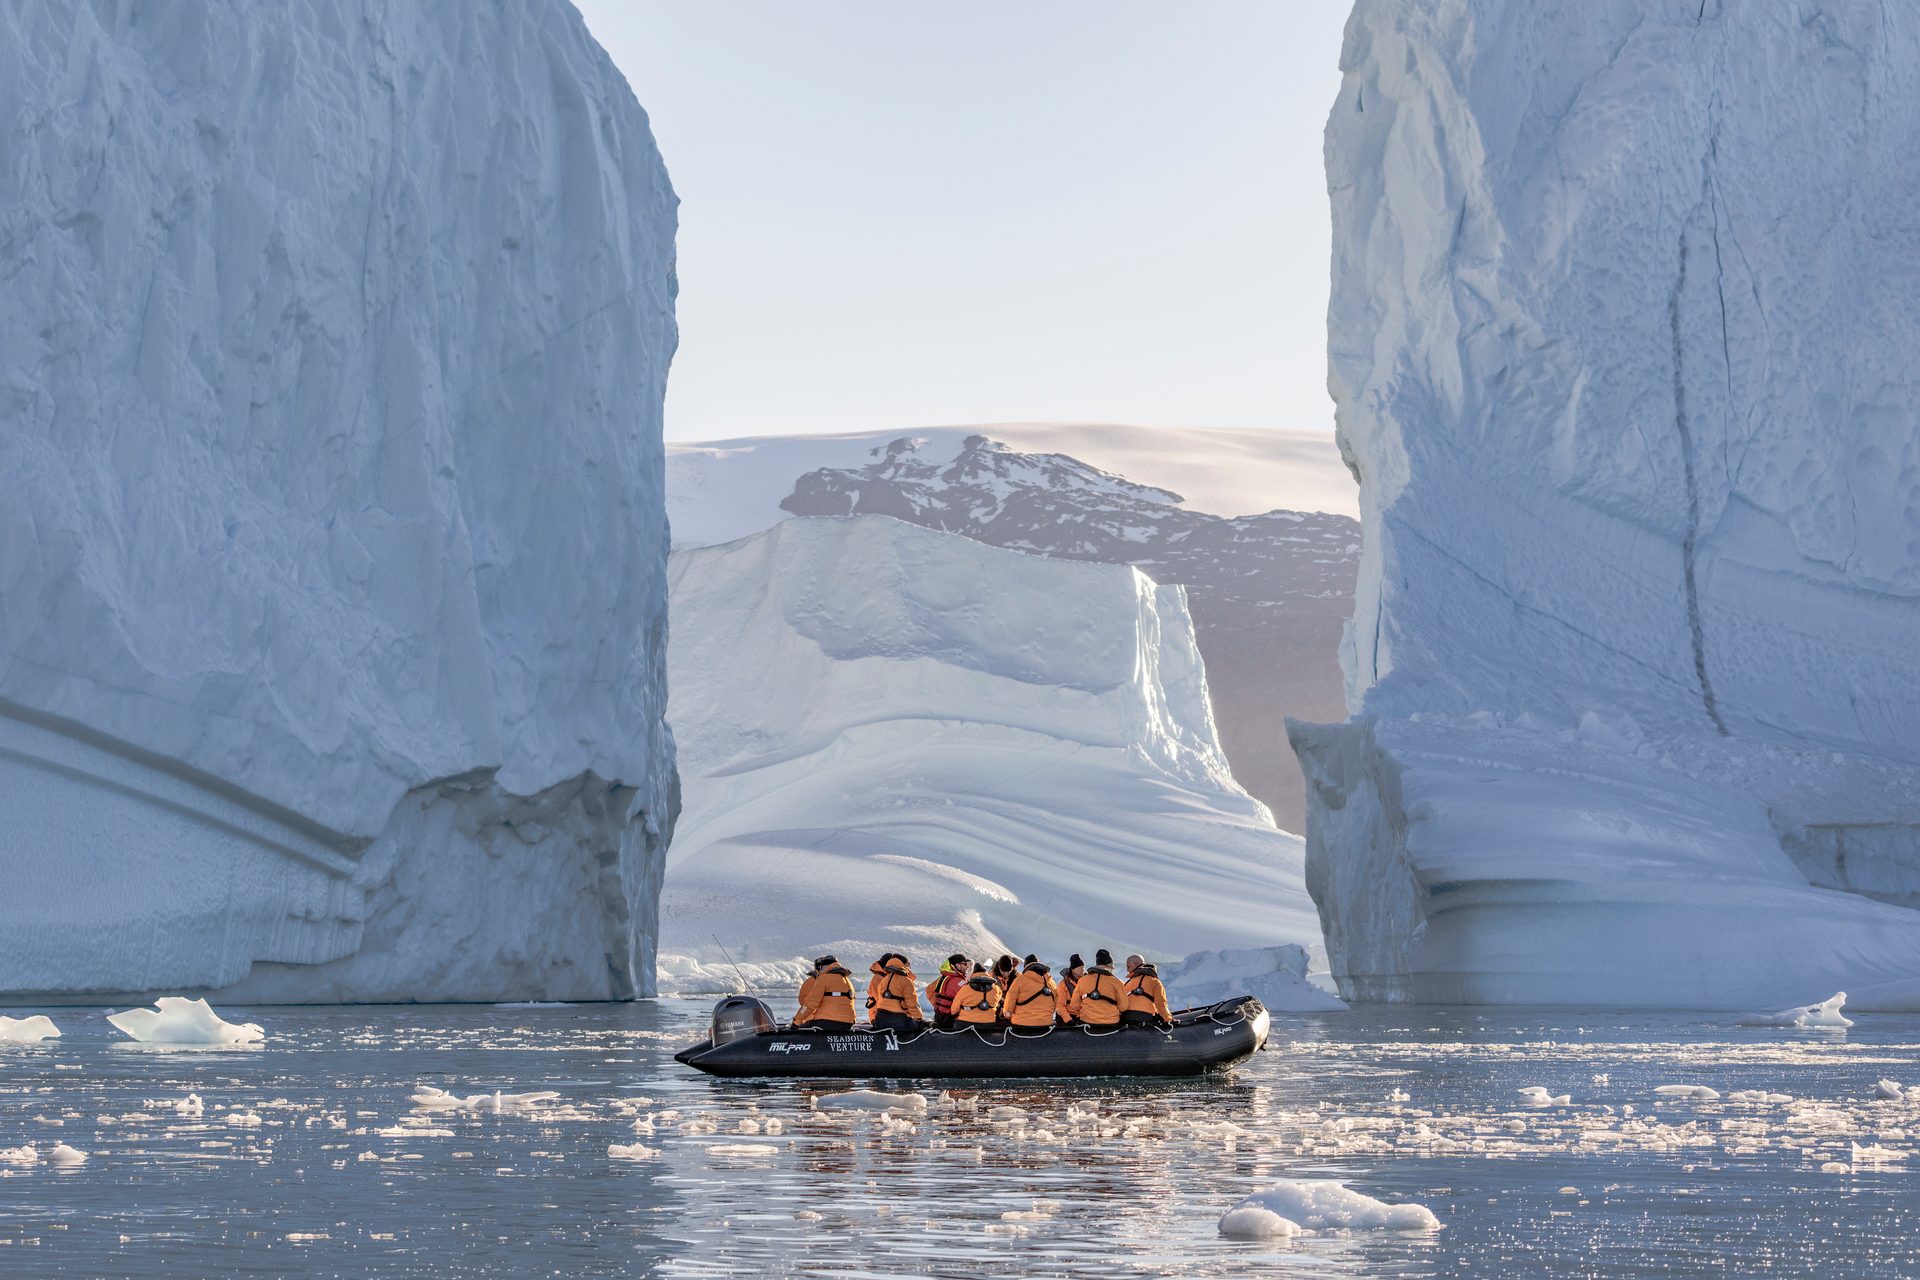 Polar ice cap, Body of water, Boat, Sky, Watercraft, Vehicle, Snow